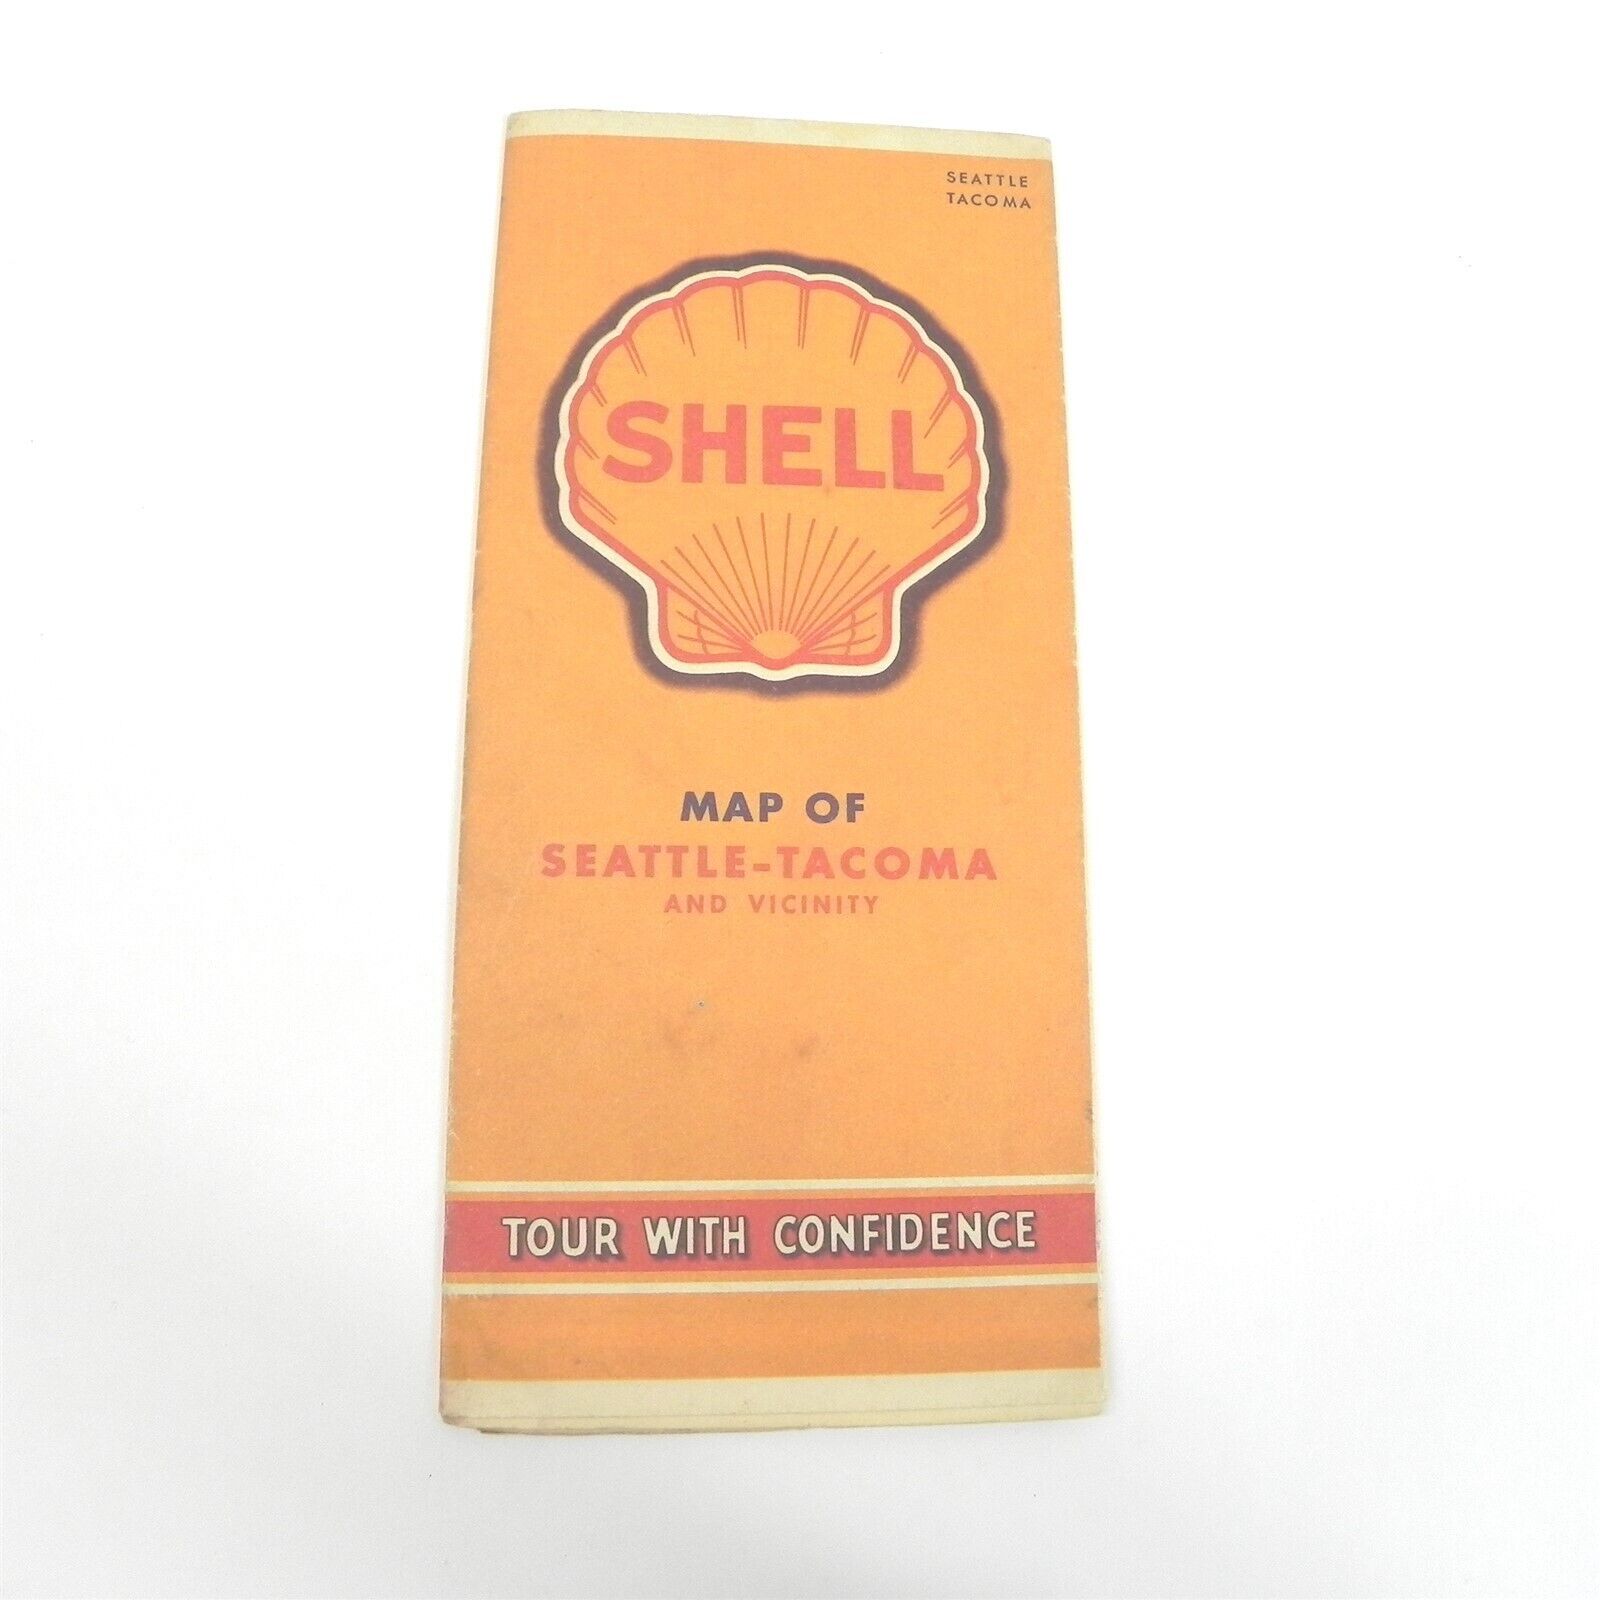 VINTAGE 1946 SHELL OIL COMPANY MAP OF SEATTLE TACOMA WASHINGTON TOURING GUIDE